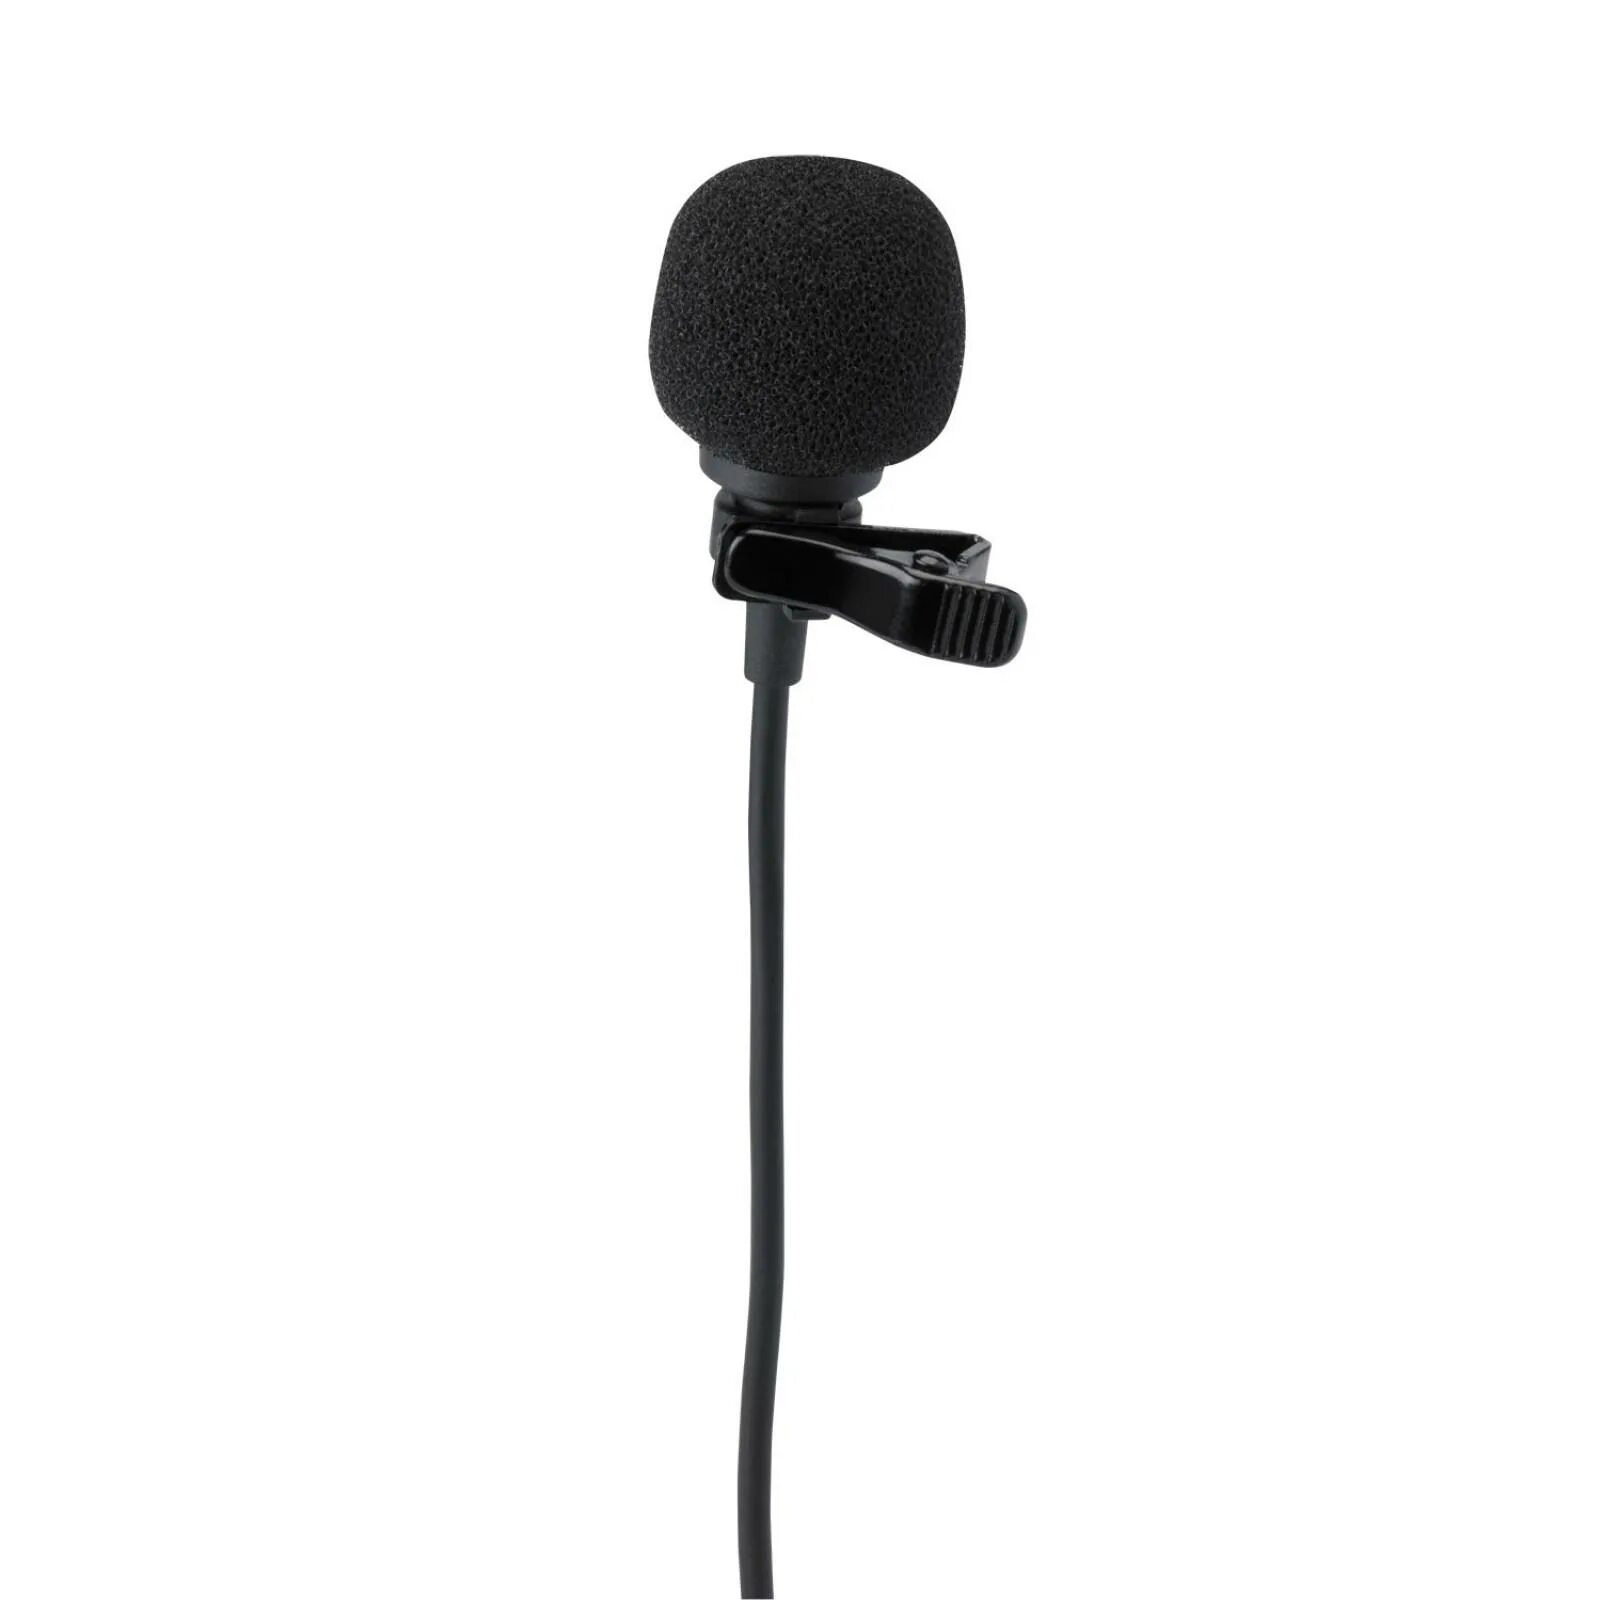 Петличный микрофон Mini XLR. Петличный микрофон с передатчиком. Петличный микрофон без провода. Радиомикрофон Audiophony Pack-uhf410-hand-f5, 35мвт. Телефон в качестве микрофона